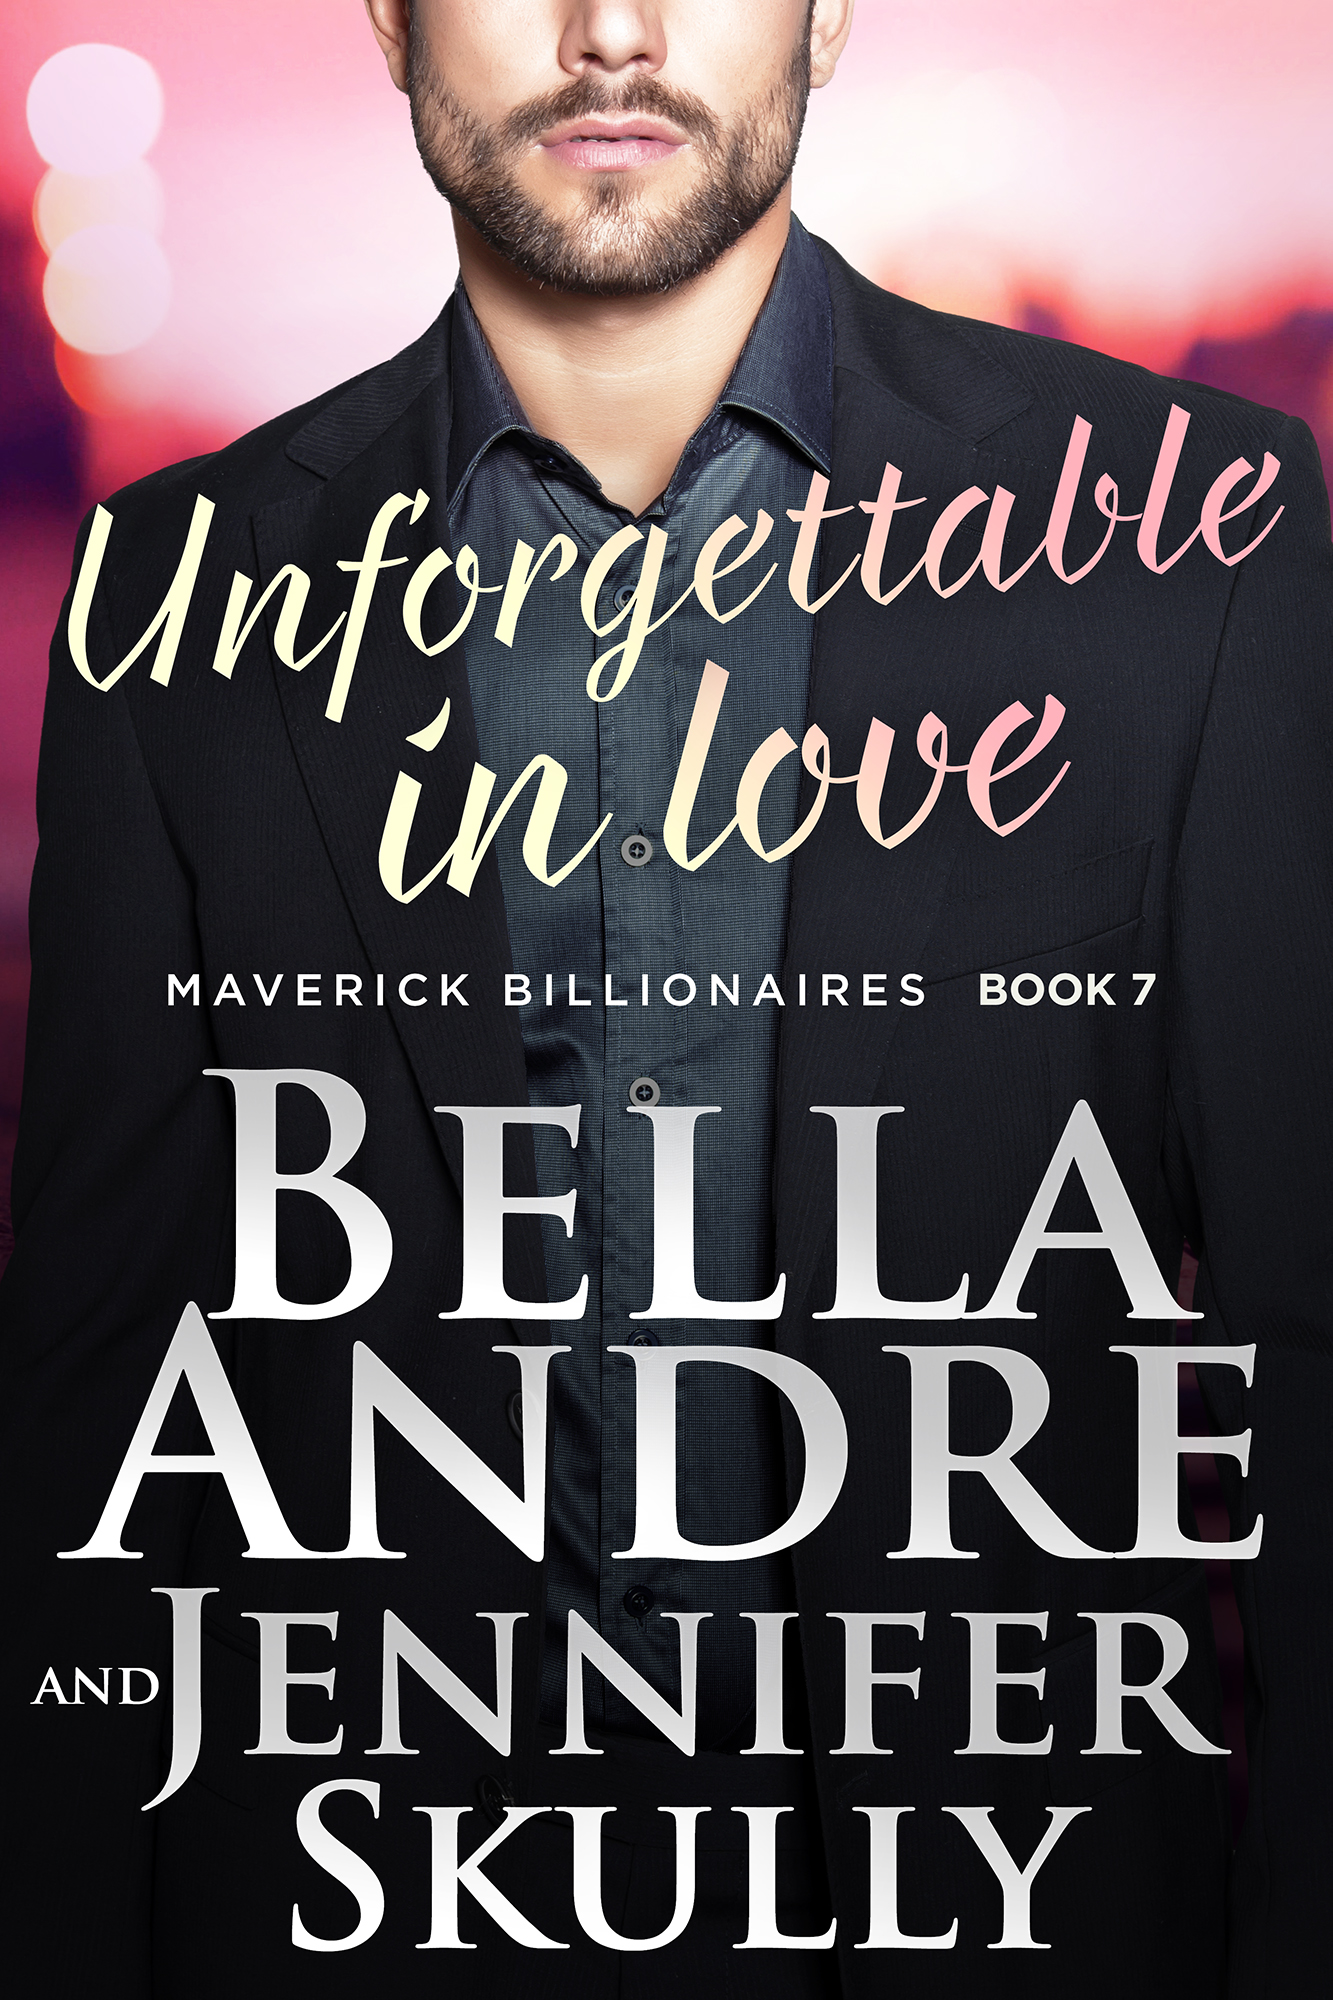 Unforgettable in Love - Maverick Billionaires Book 7 - Bella Andre and Jennifer Skully